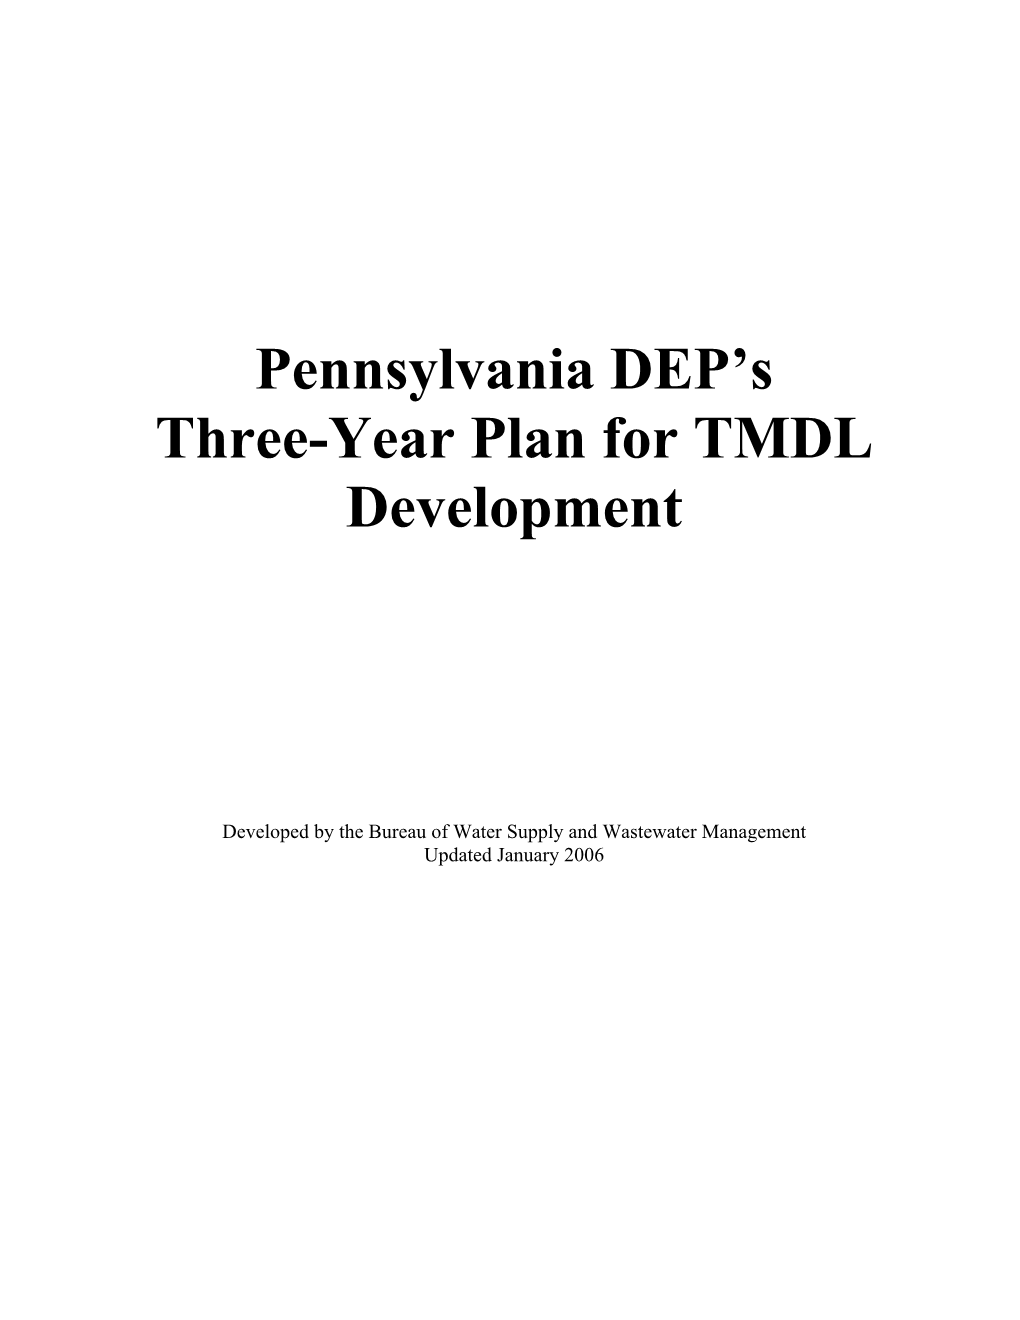 Pennsylvania DEP's Three-Year Plan for TMDL Development